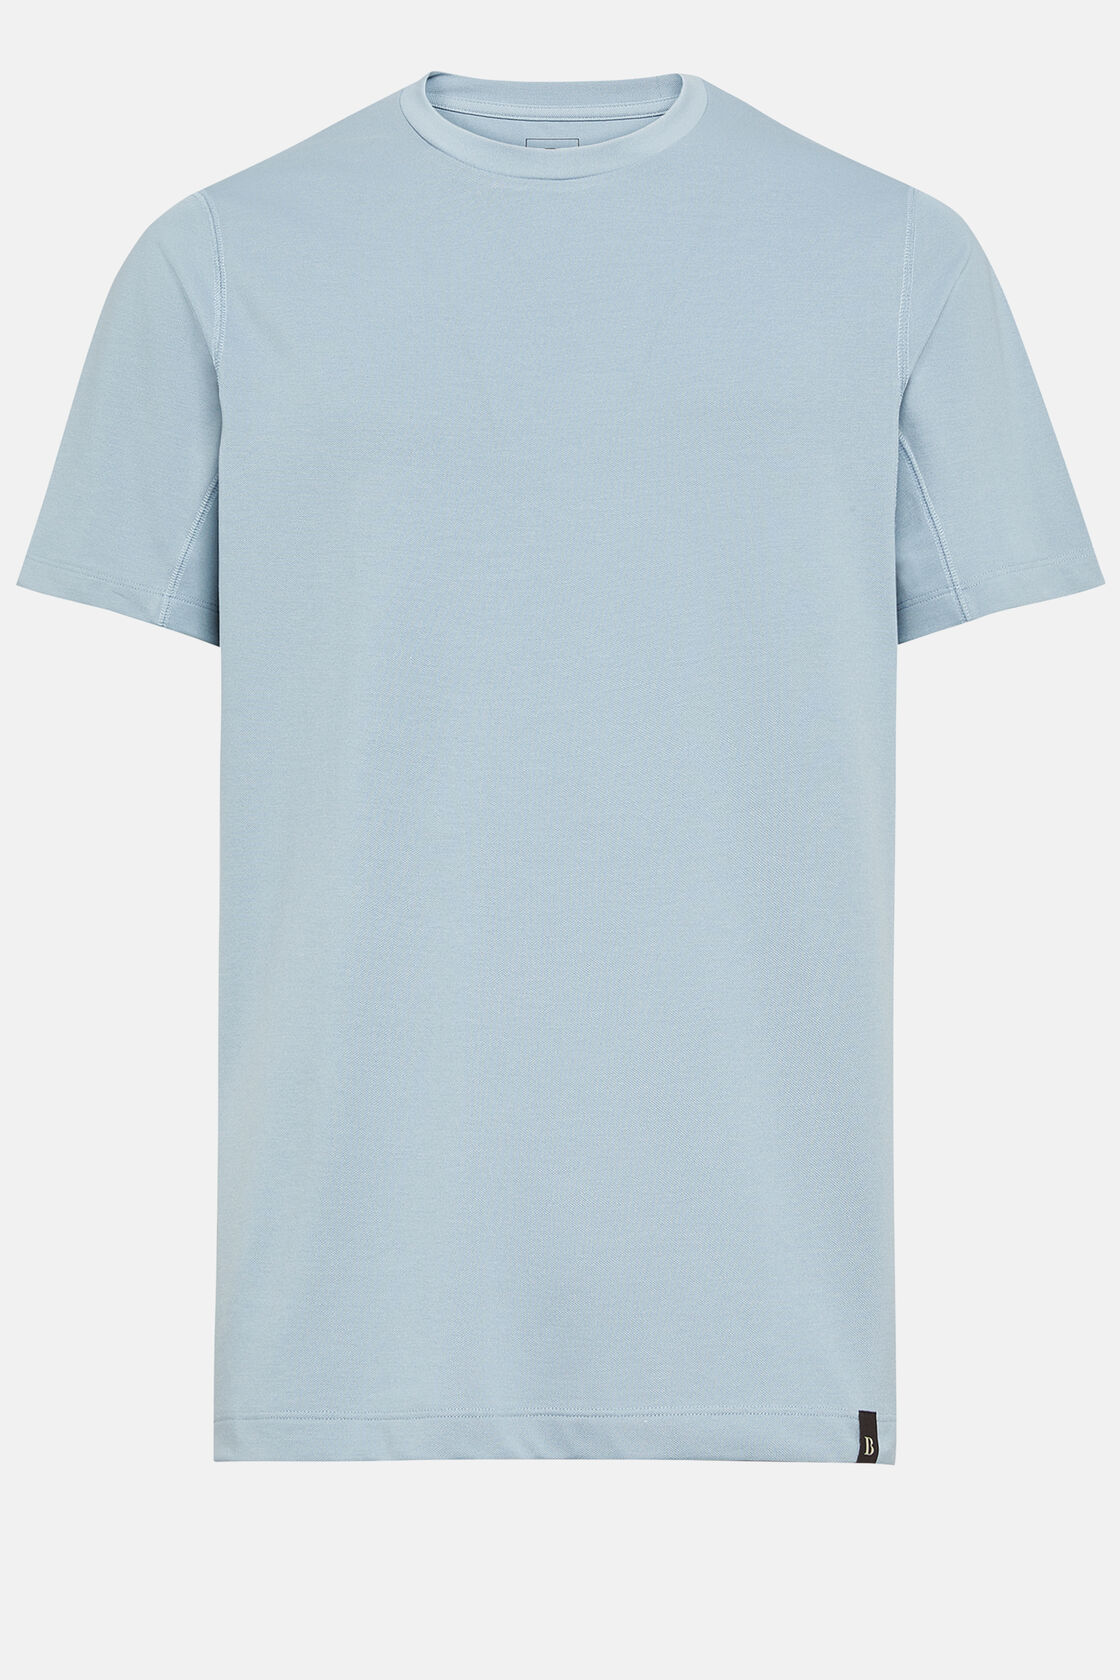 Hochwertiges Piqué-T-Shirt, Hellblau, hi-res